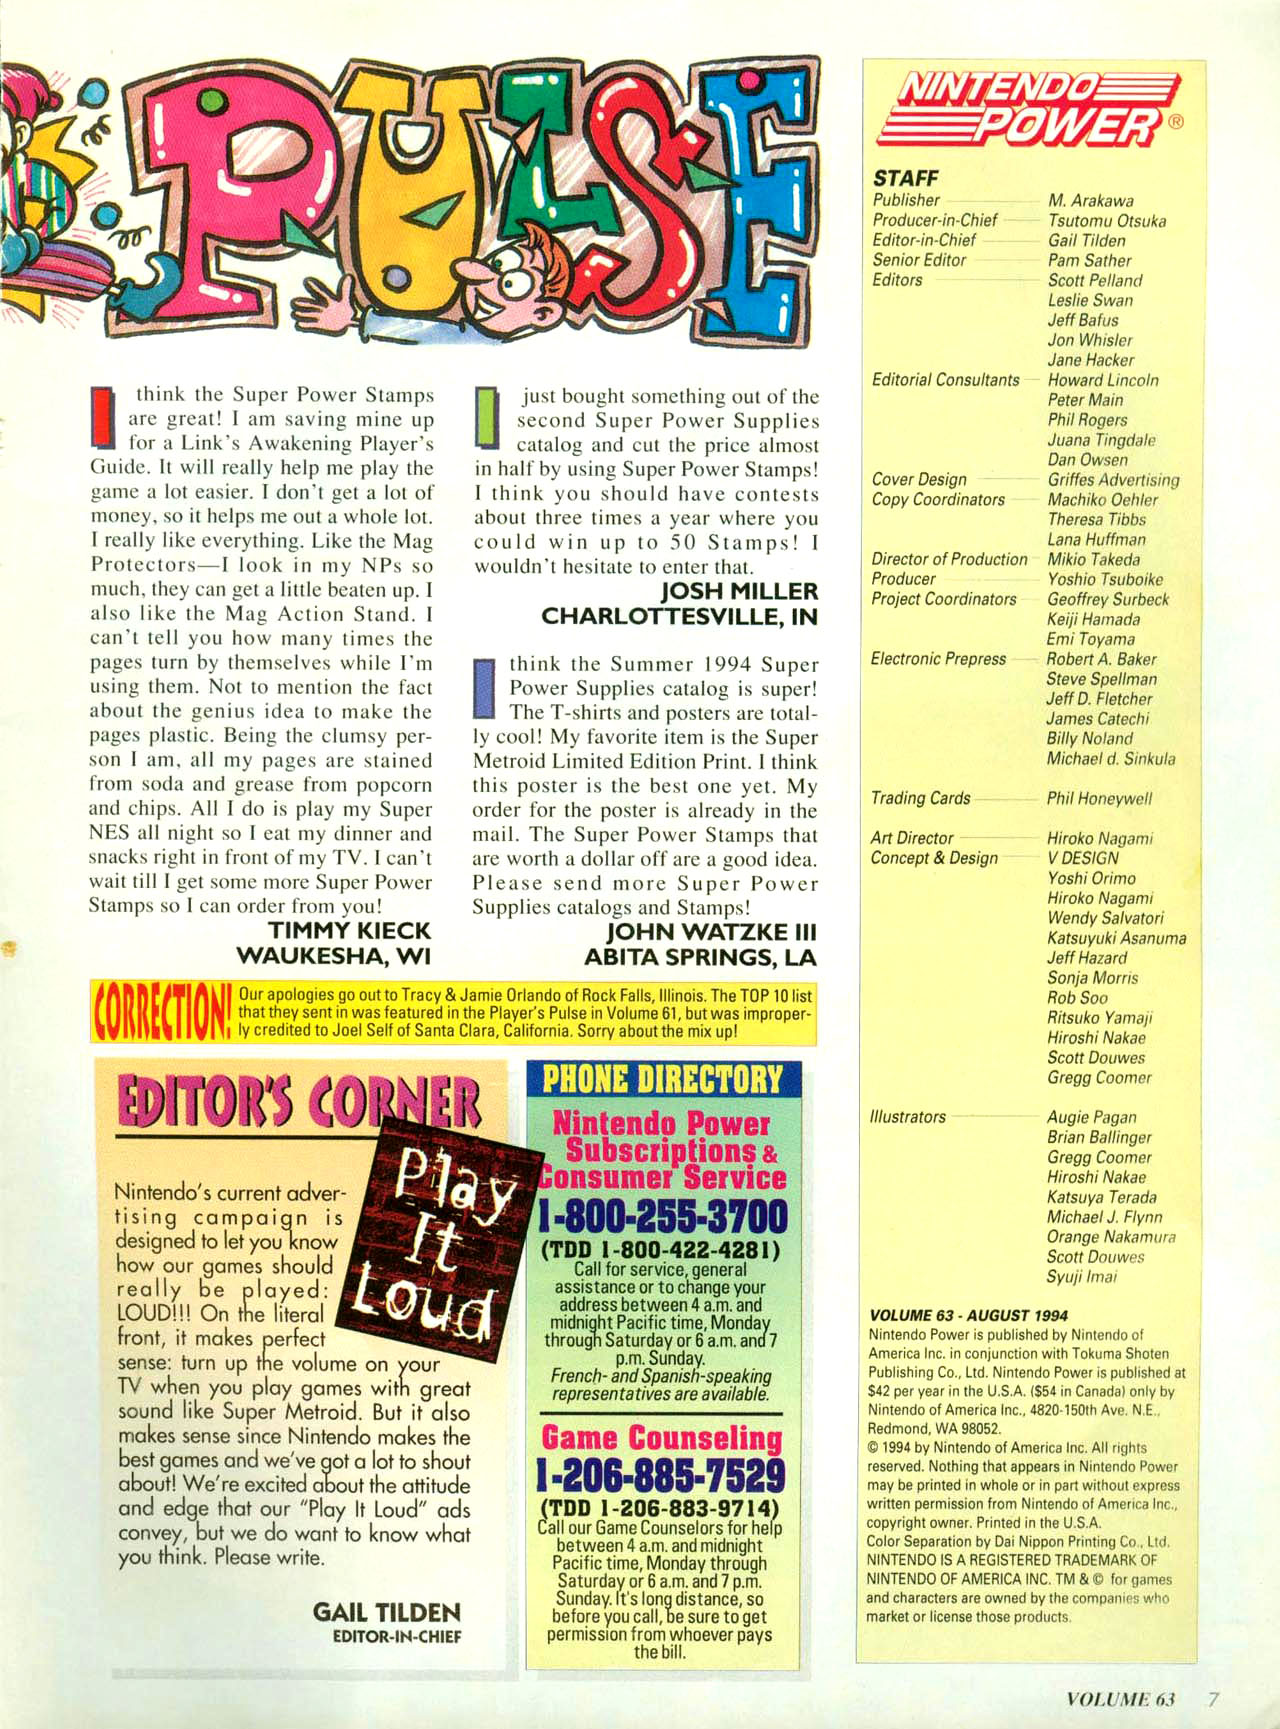 Read online Nintendo Power comic -  Issue #63 - 8